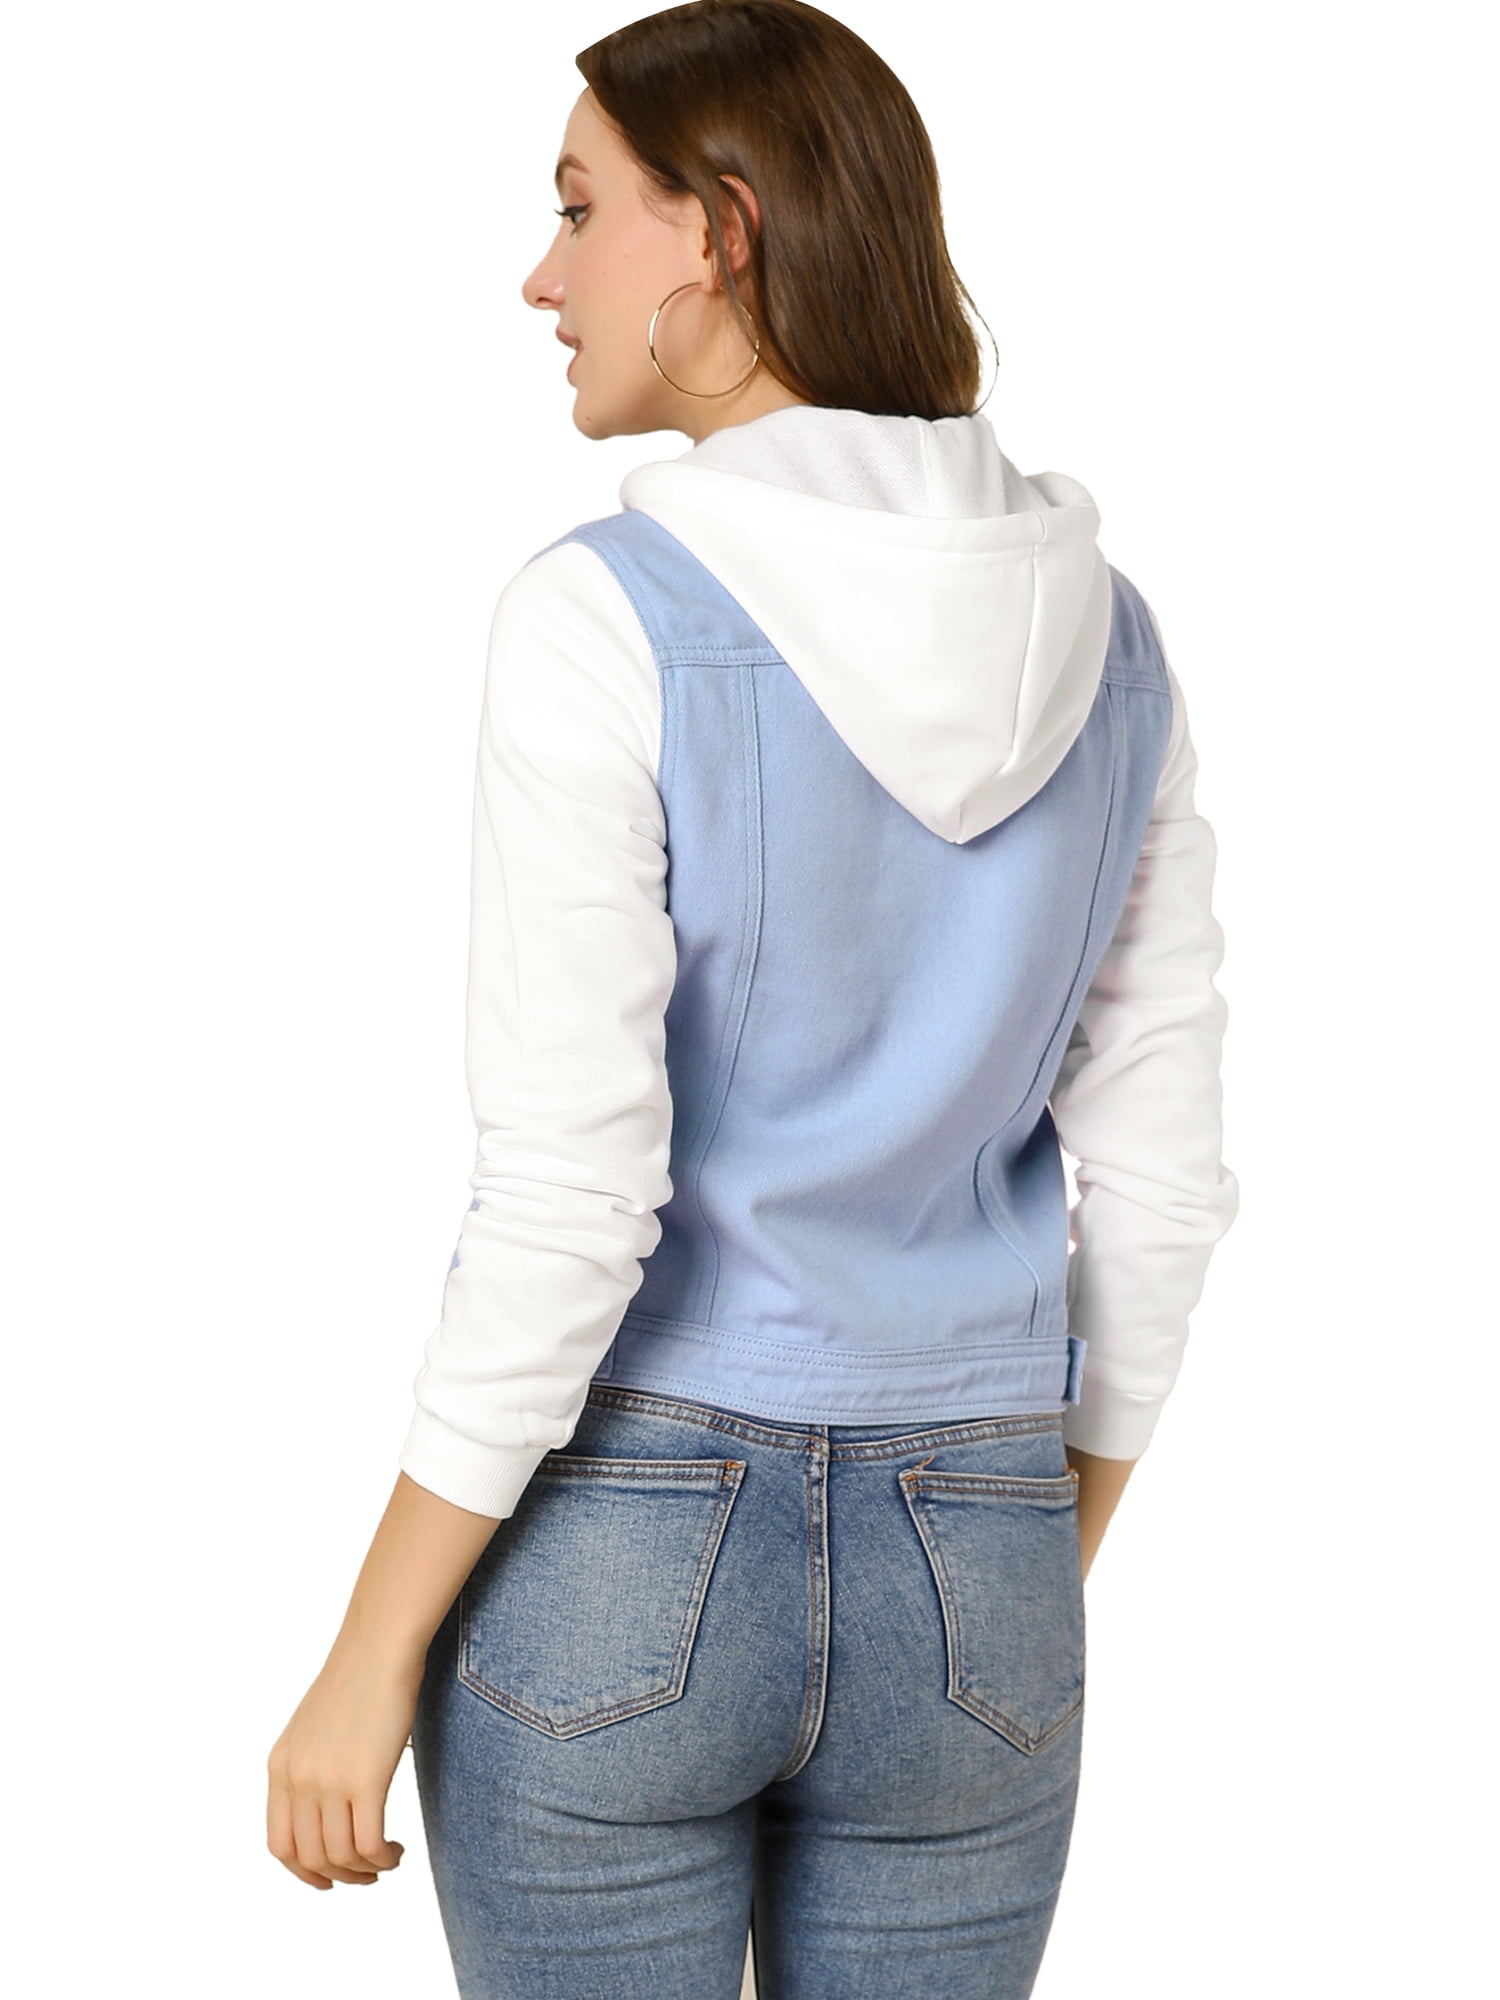 Syhood Long Denim Jacket Casual Jean Jacket Long Sleeve Denim Jacket Coat for Women Light Blue 